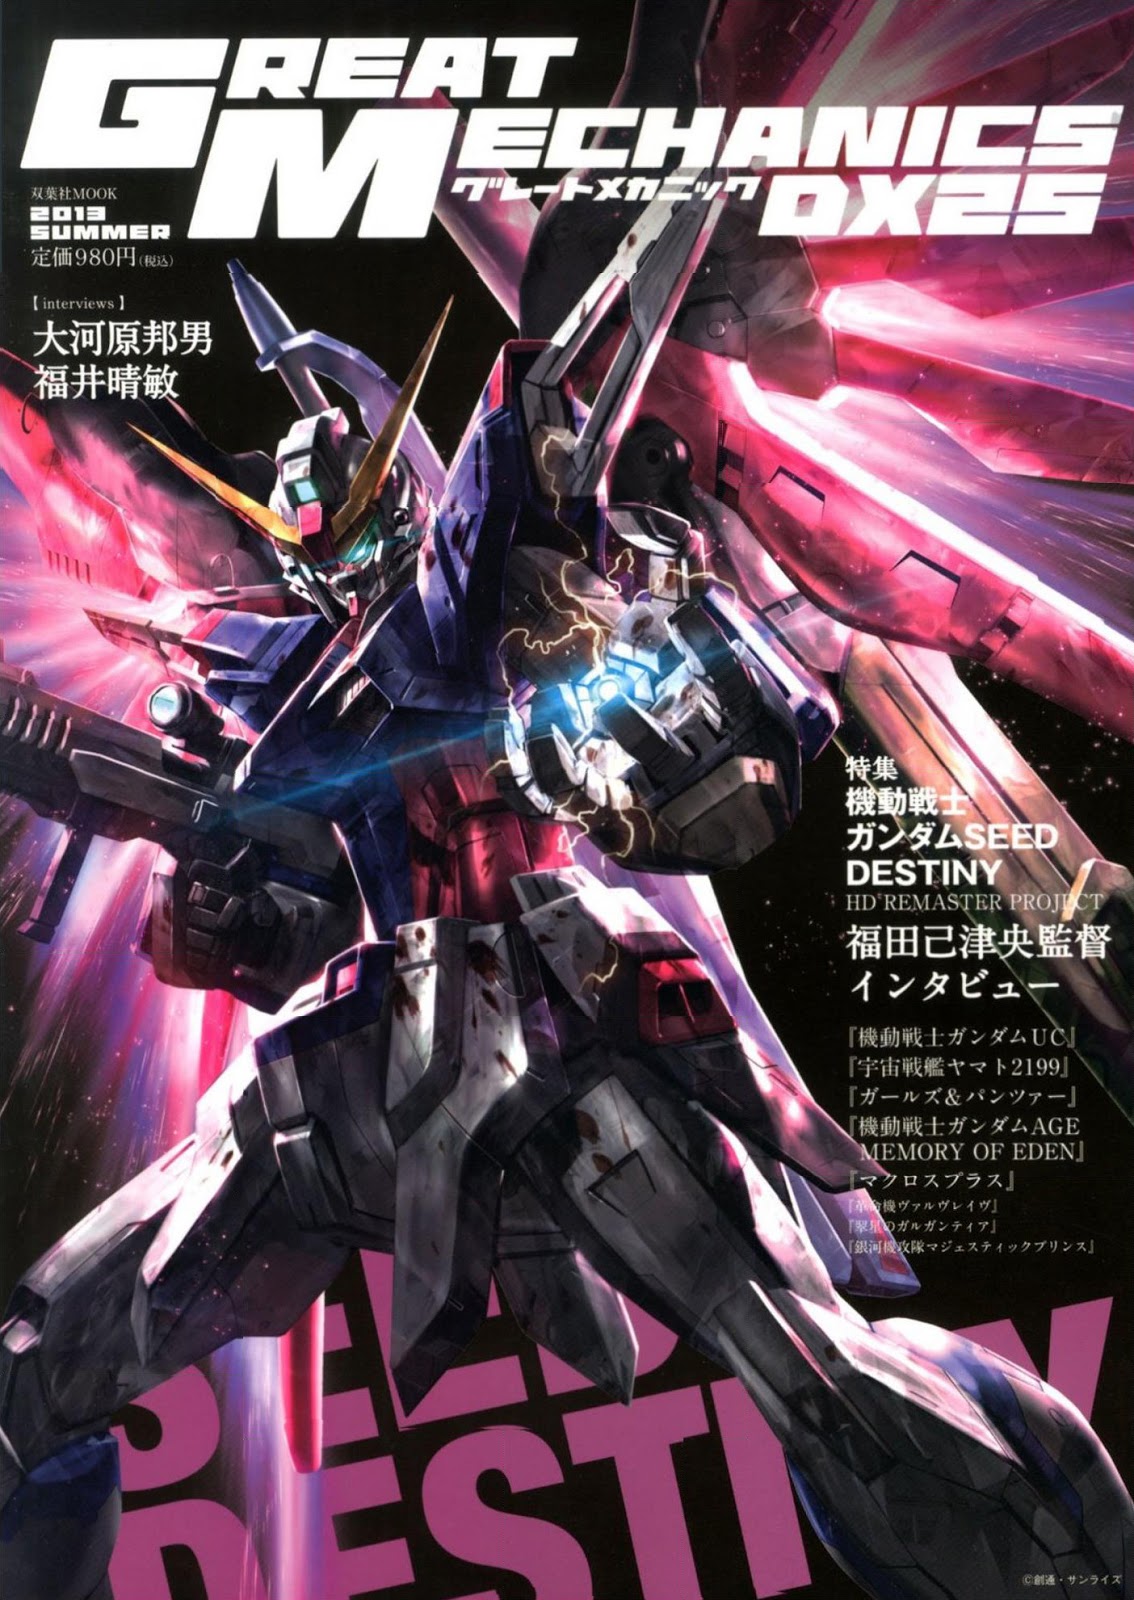 Great Mechanics Dx 25 Futabasha Mook Gundam Kits Collection News And Reviews